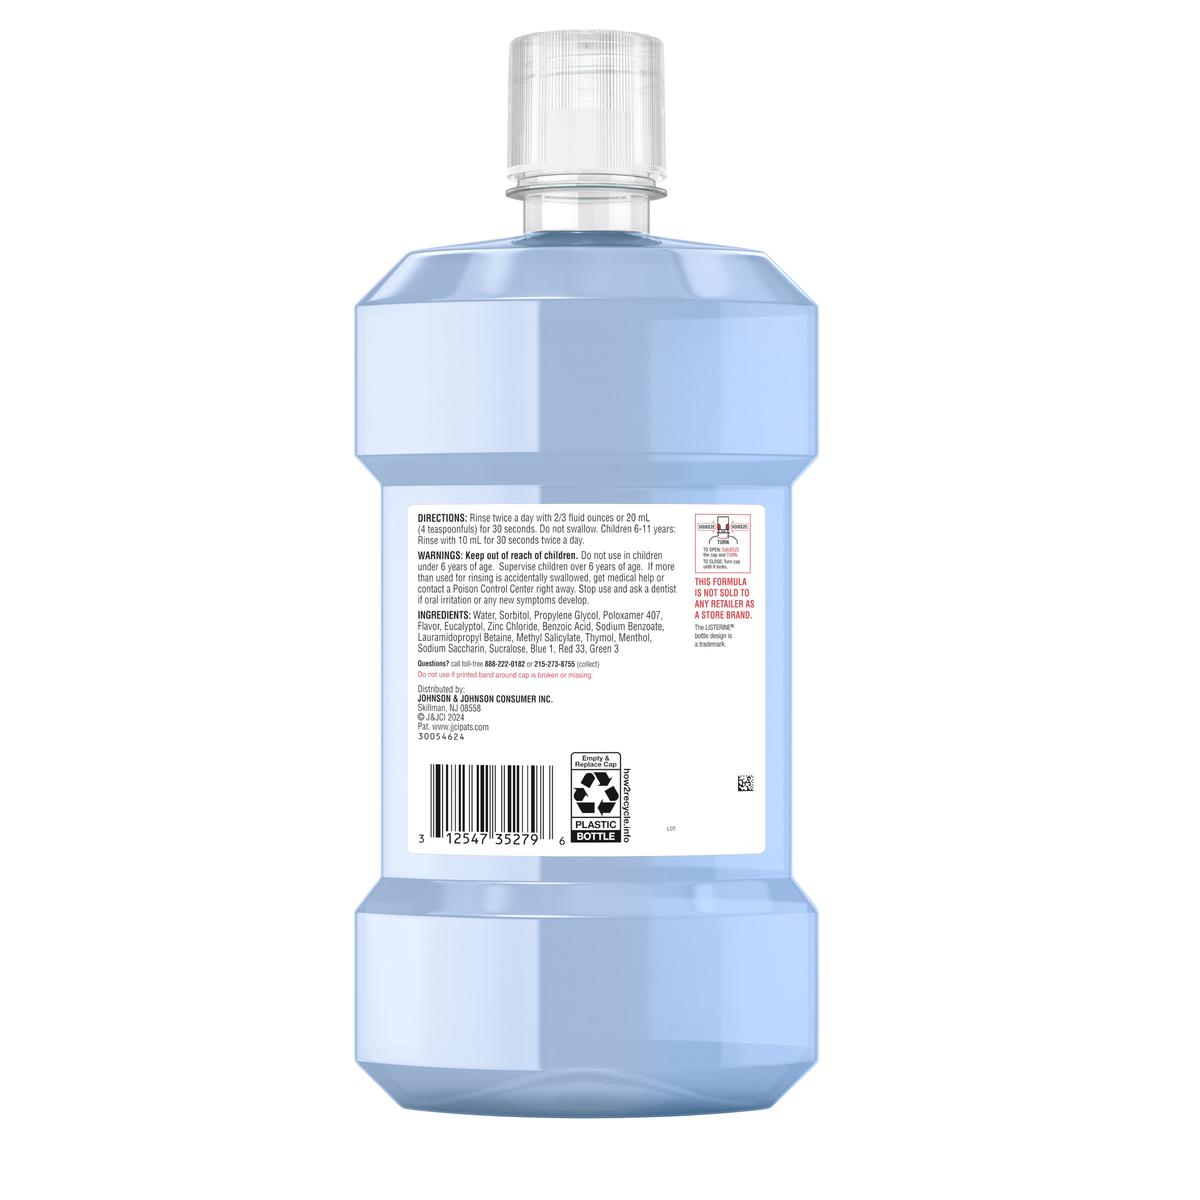 Listerine Clinical Solutions Breath Defense mouthwash bottle back